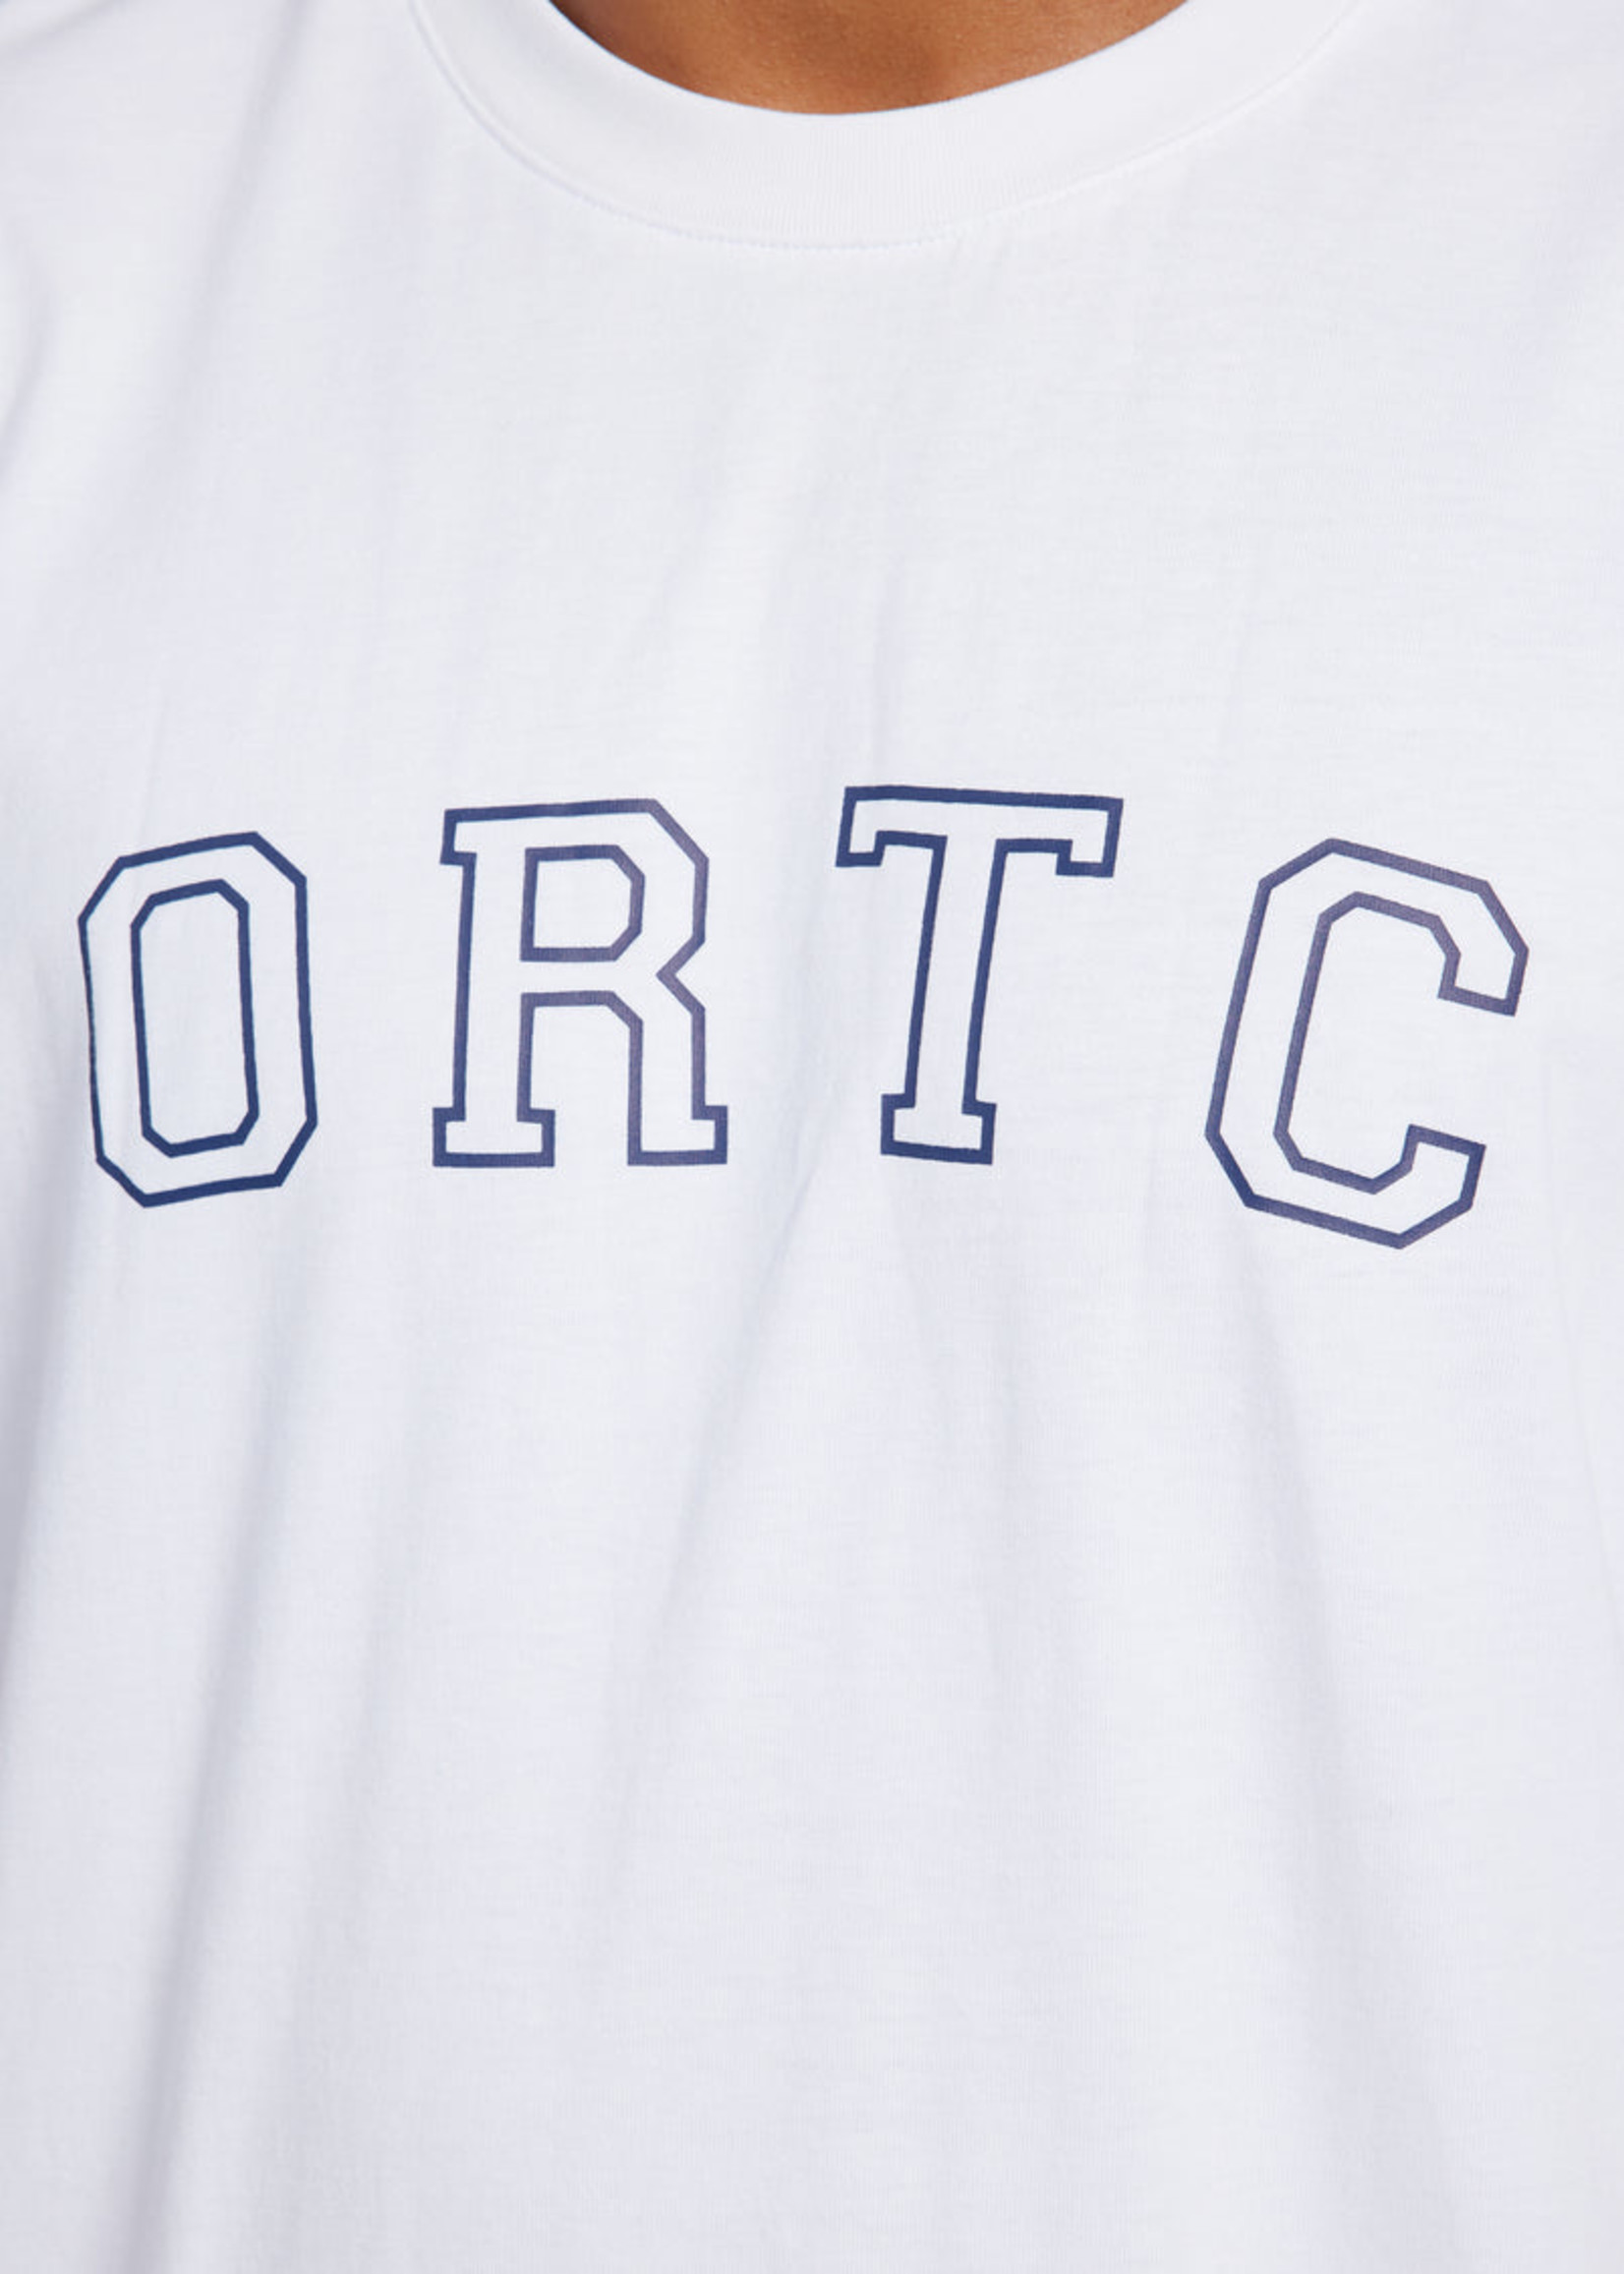 ORTC College T shirt (White)